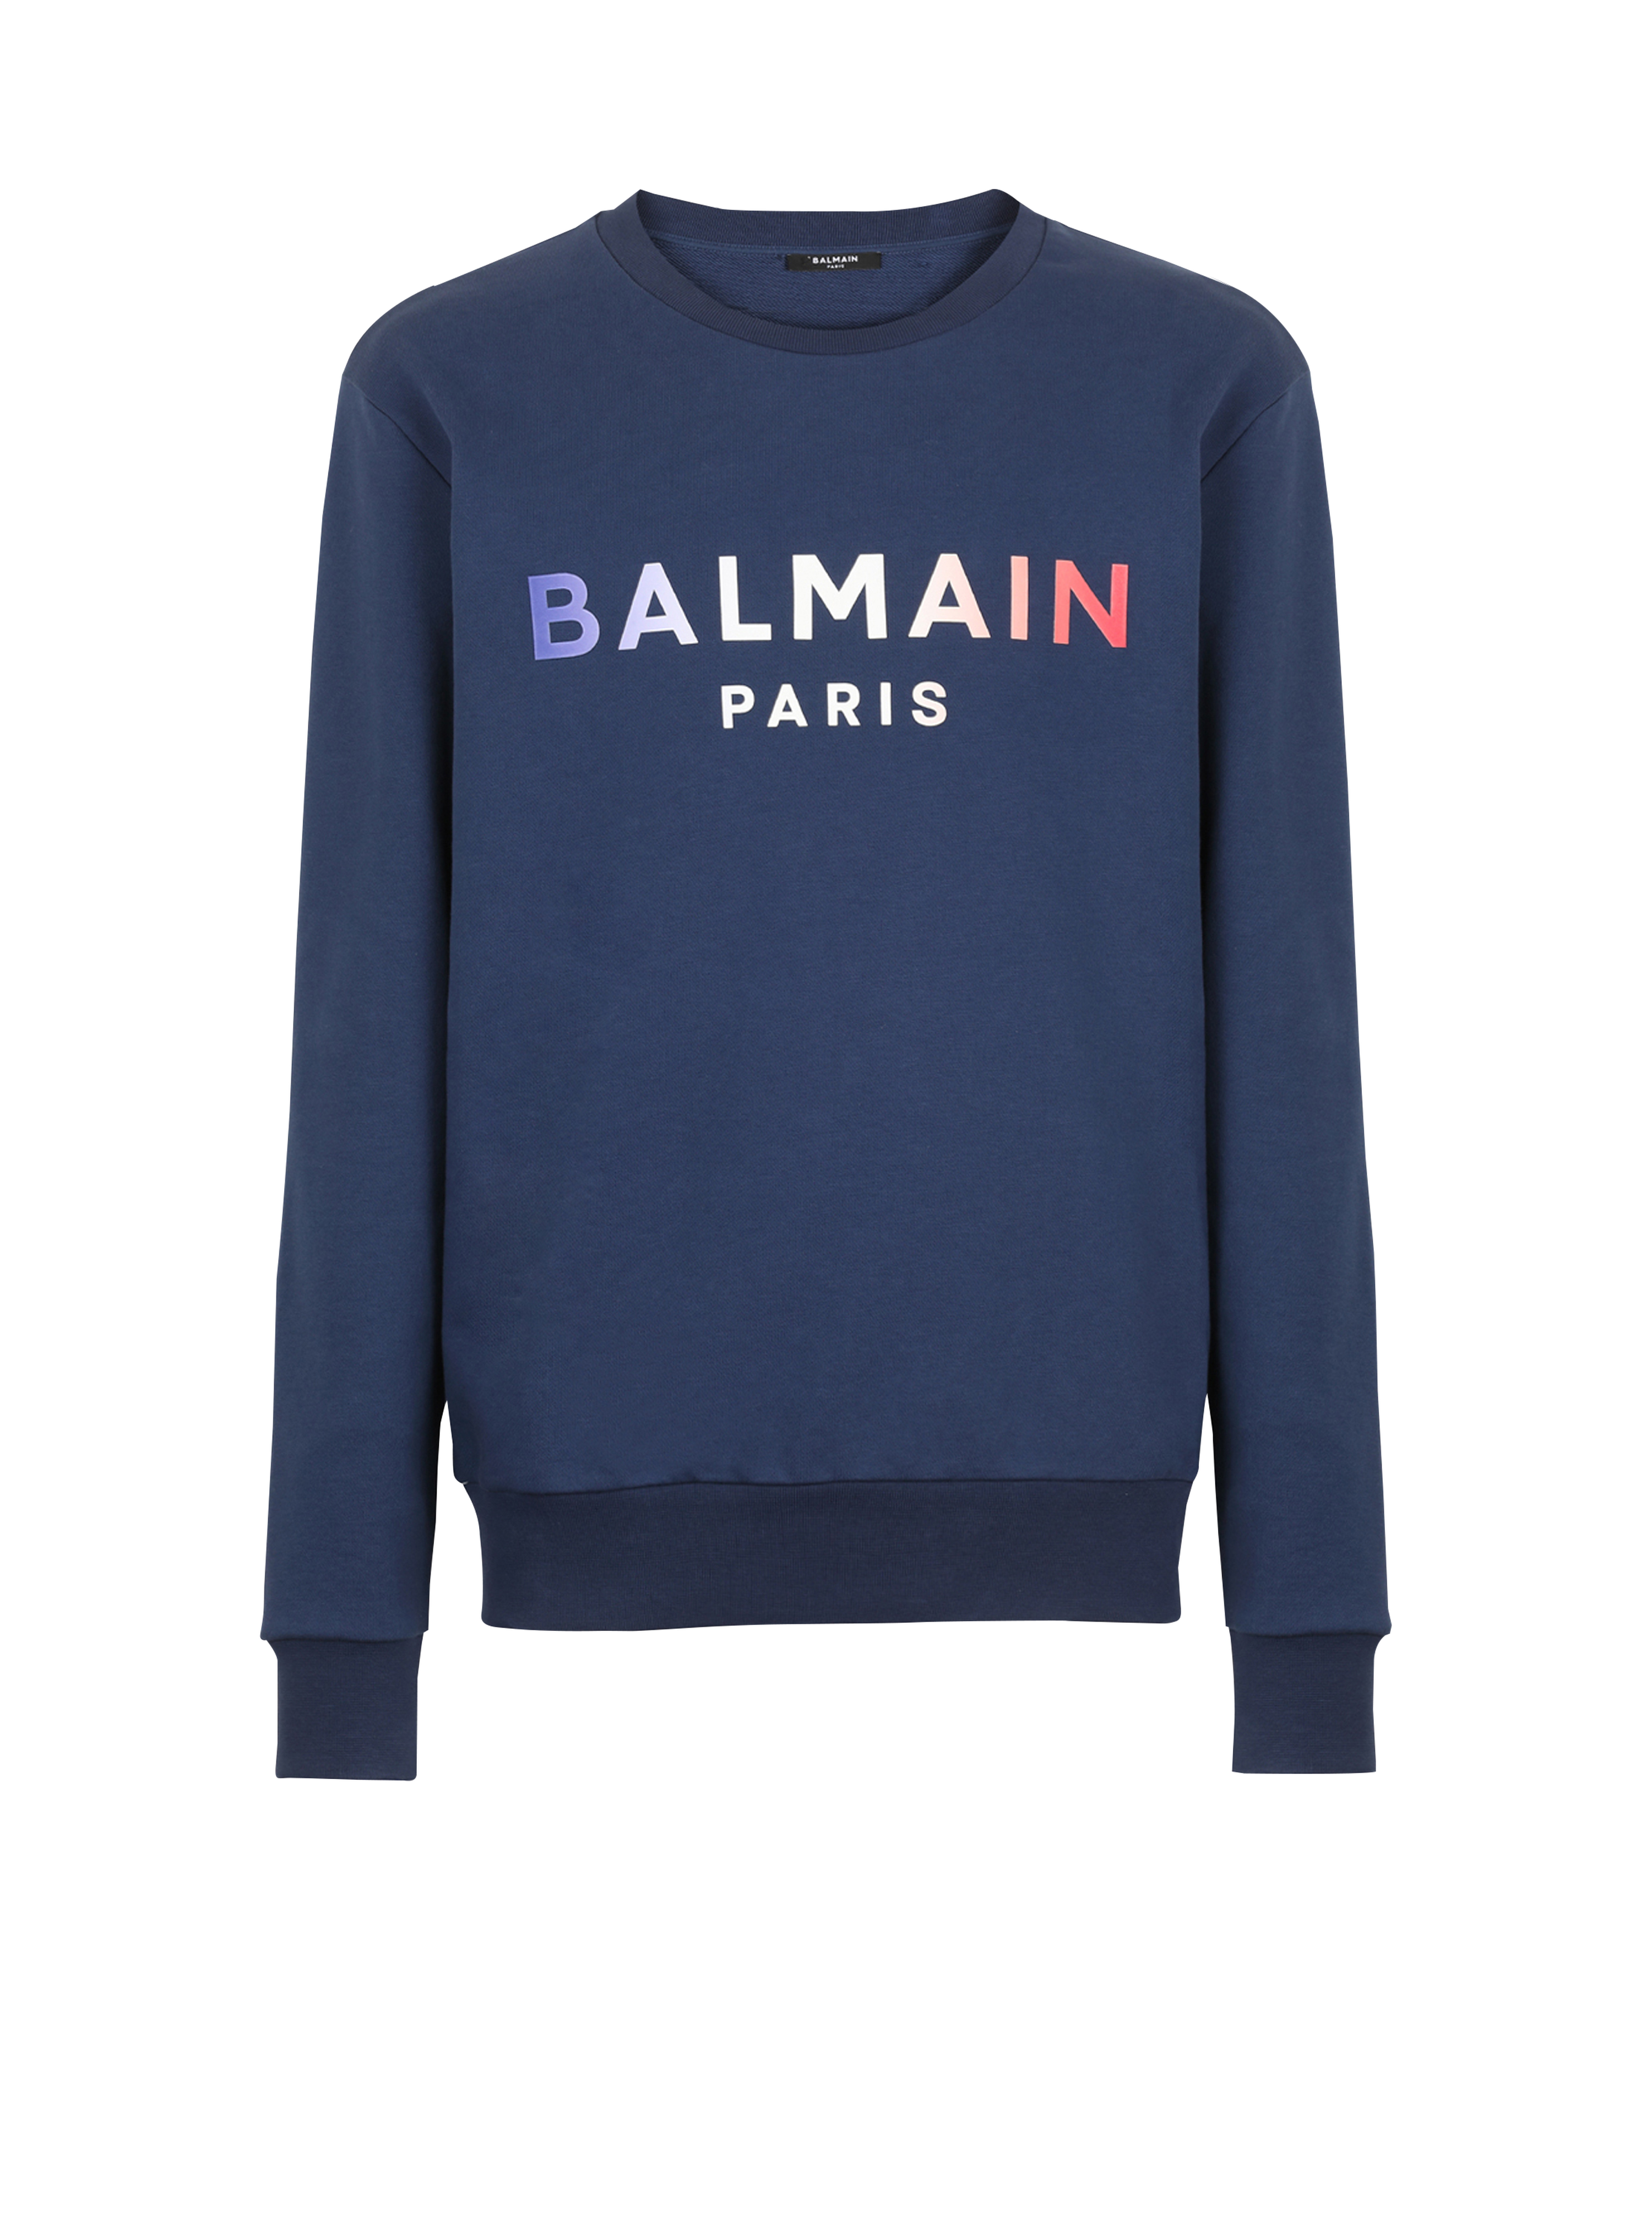 HIGH SUMMER CAPSULE - Cotton sweatshirt with Balmain Paris tie-dye logo print, navy